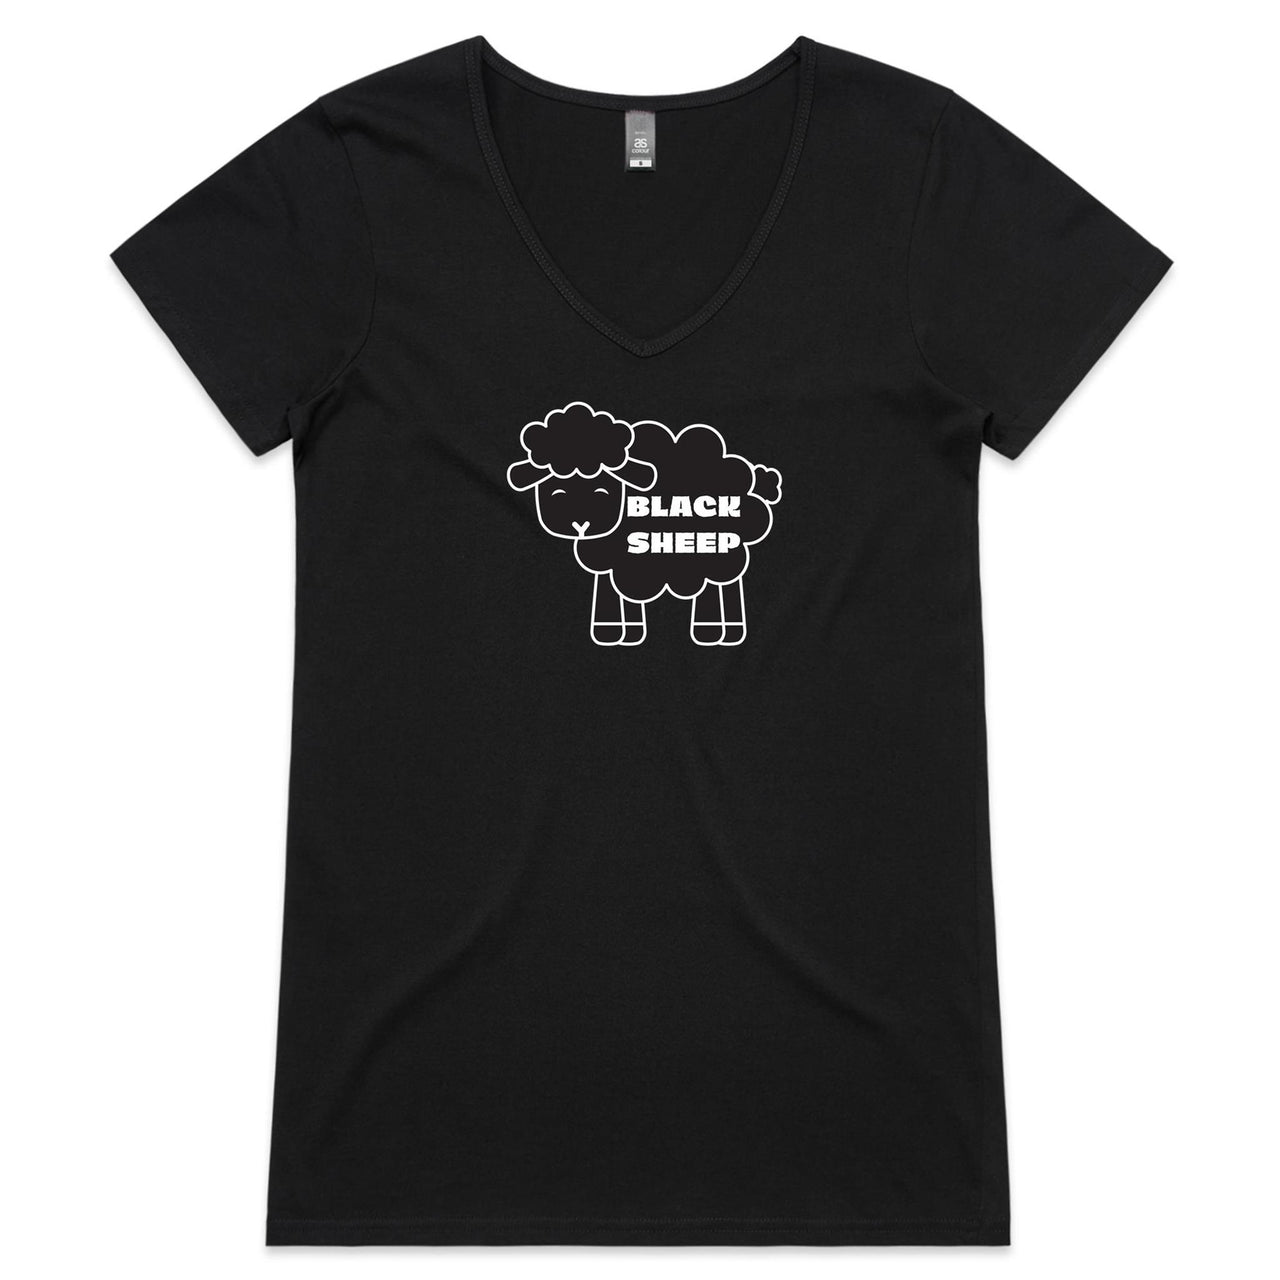 CBF Black Sheep Womens Fitted V-Neck T-Shirt black by CBF Clothing